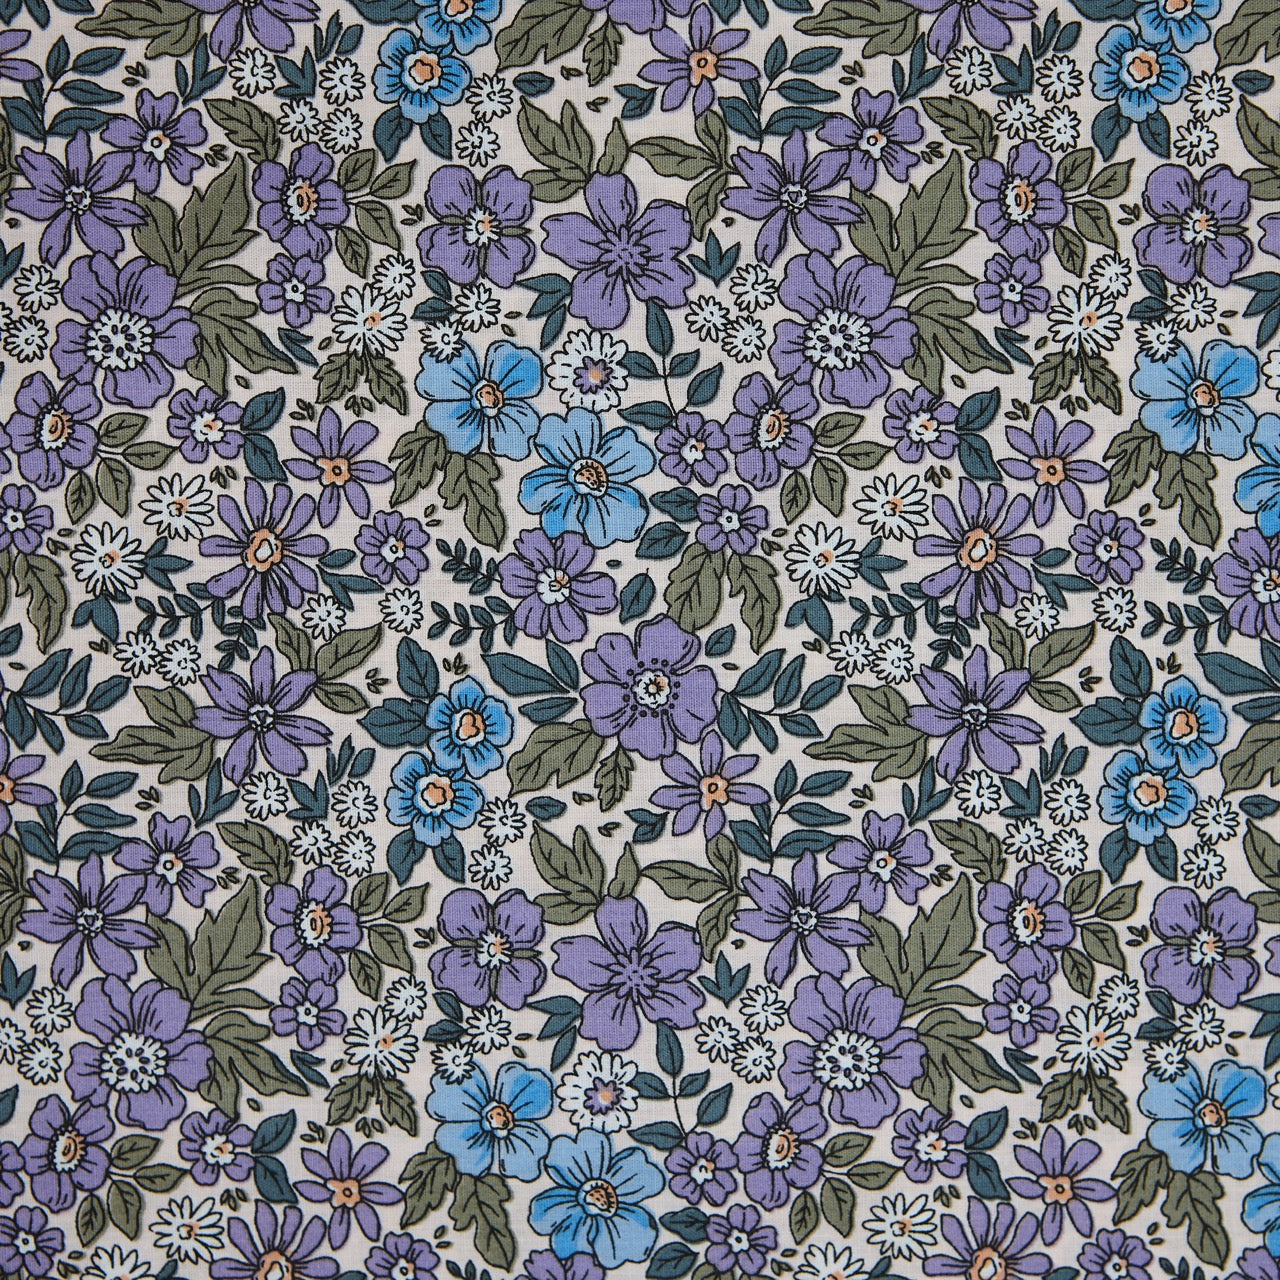 Cotton Floral - Ditsy Field - Lavender (detail)